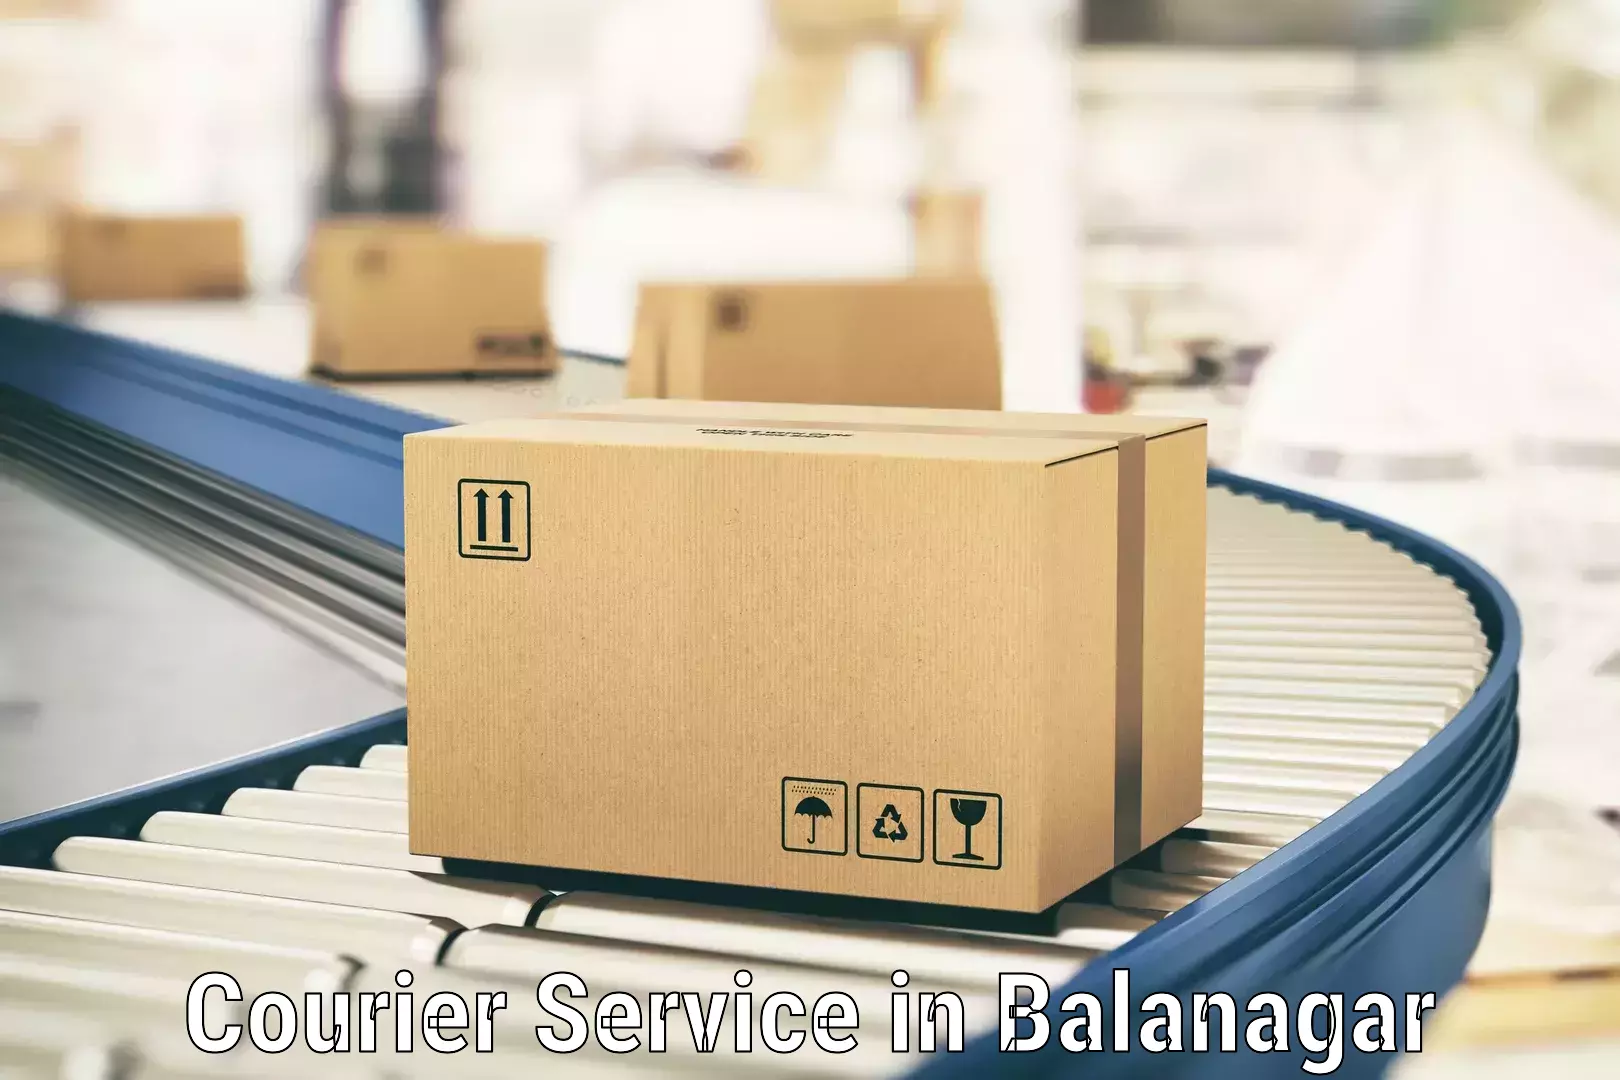 Courier service booking in Balanagar